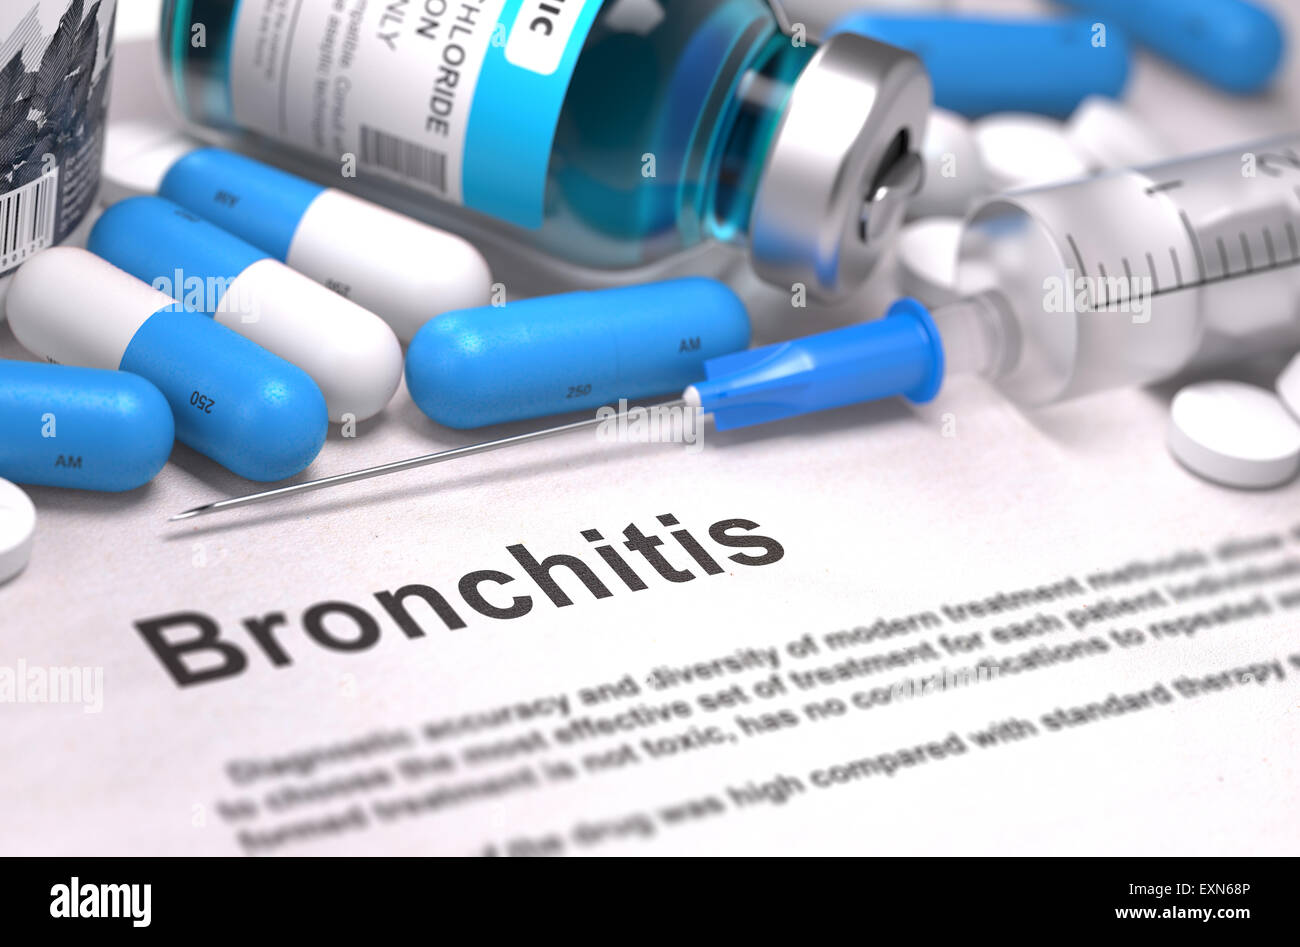 Diagnosis - Bronchitis. Medical Concept. Stock Photo